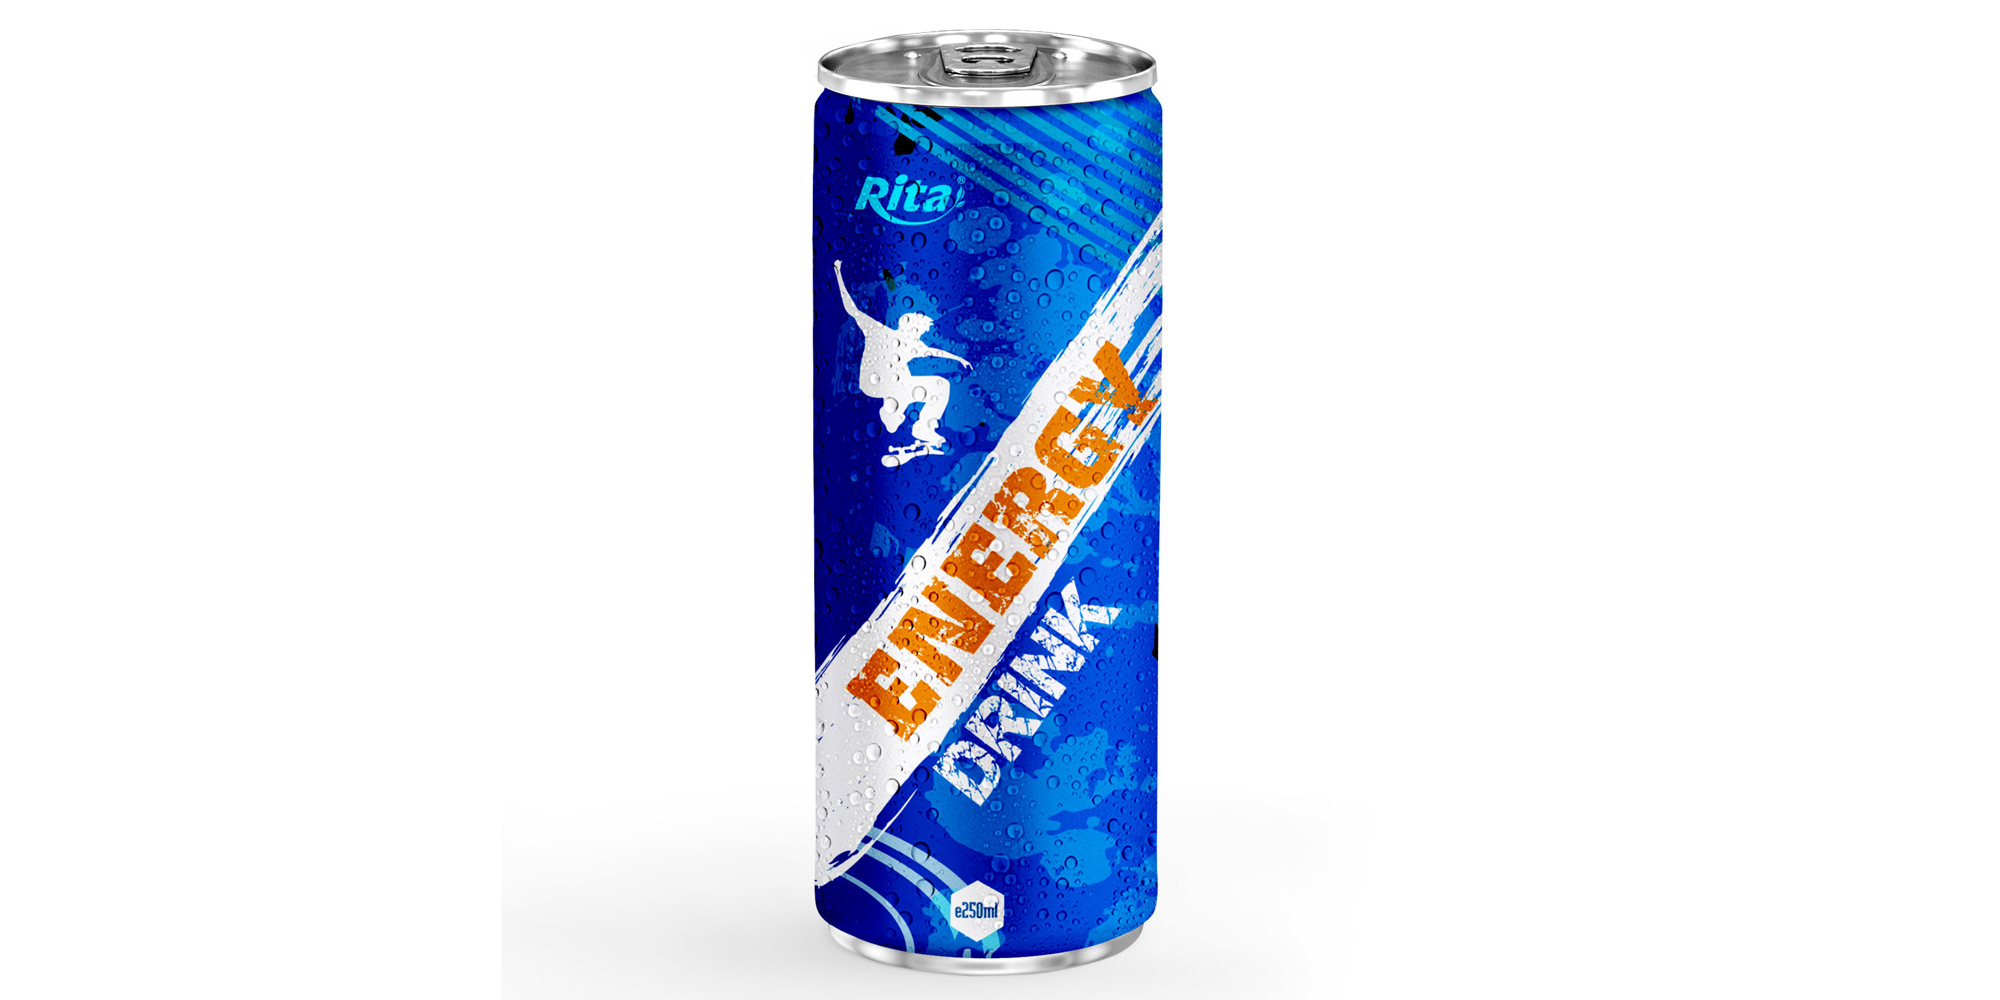 Rita Energy drink  healthy juices to buy